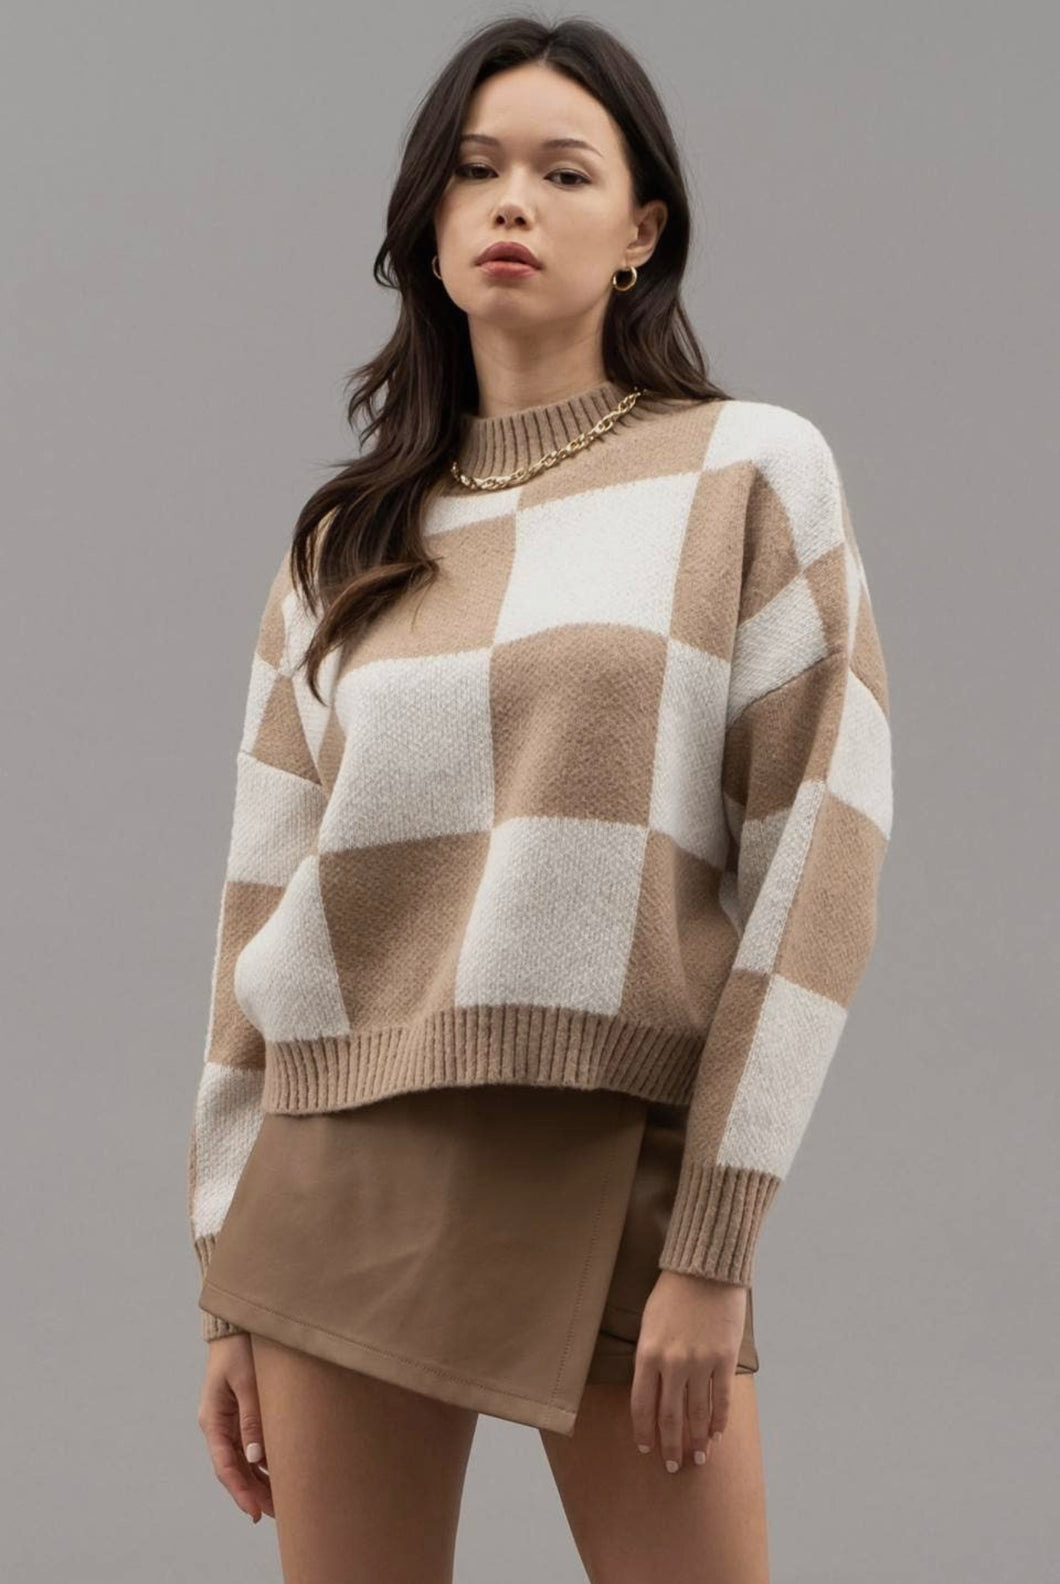 Checkered Sweater - C&C Boutique